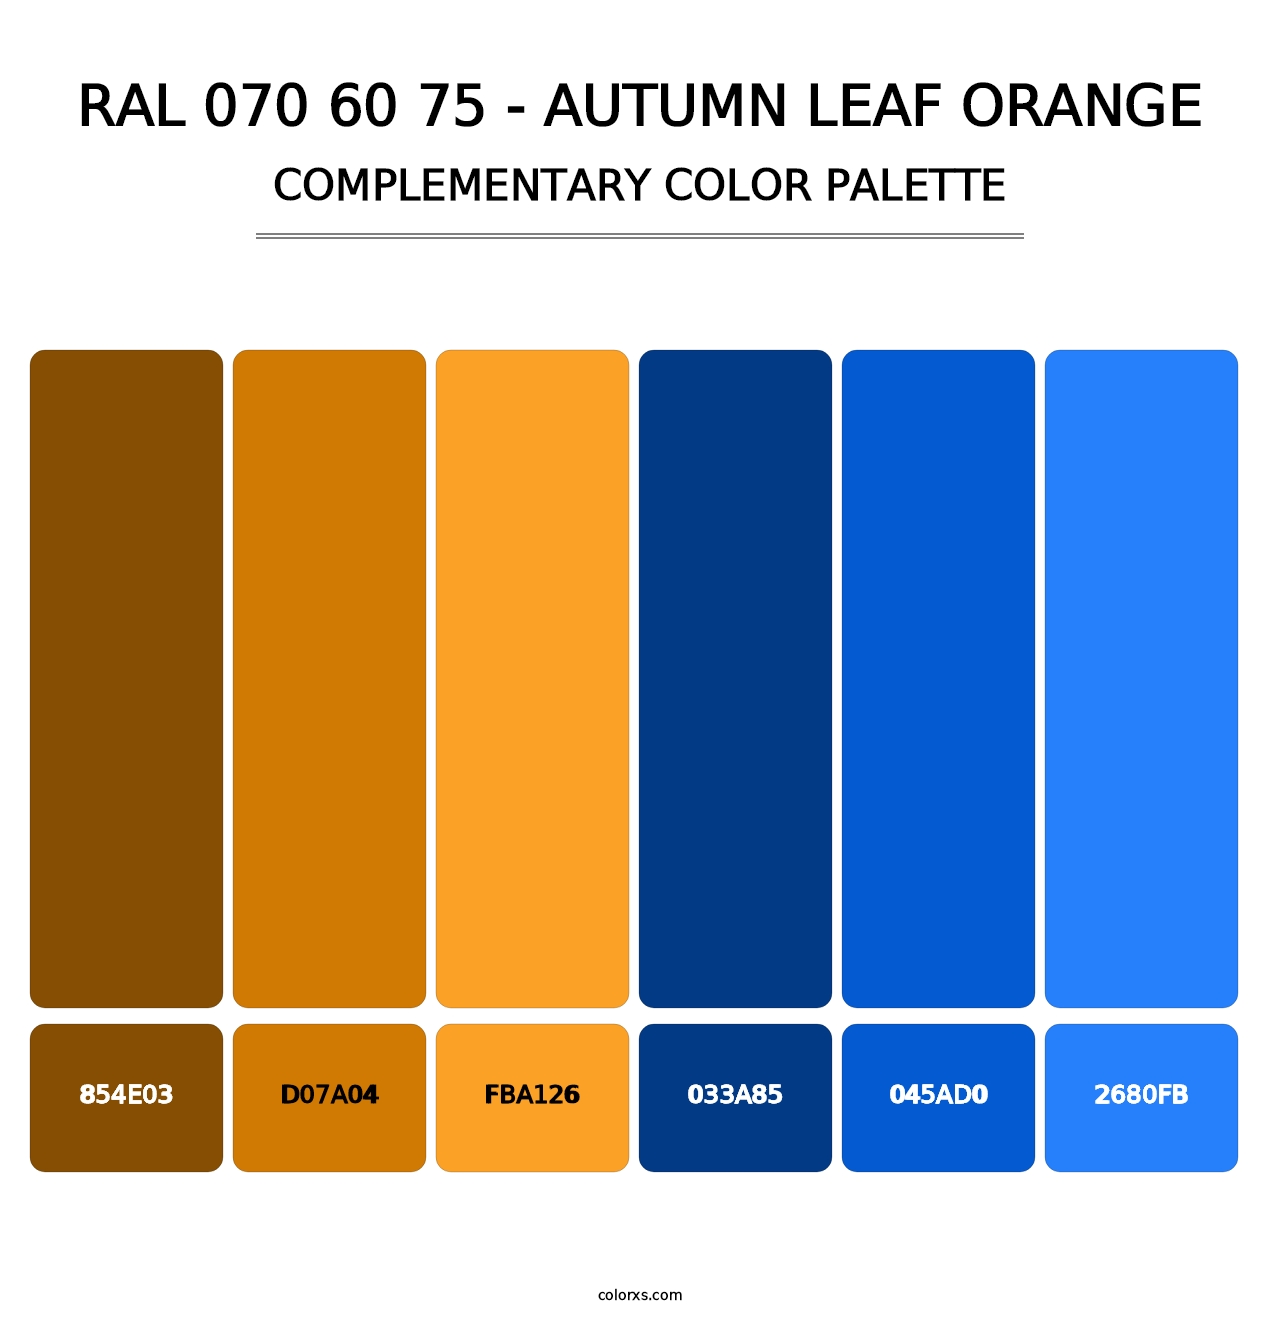 RAL 070 60 75 - Autumn Leaf Orange - Complementary Color Palette